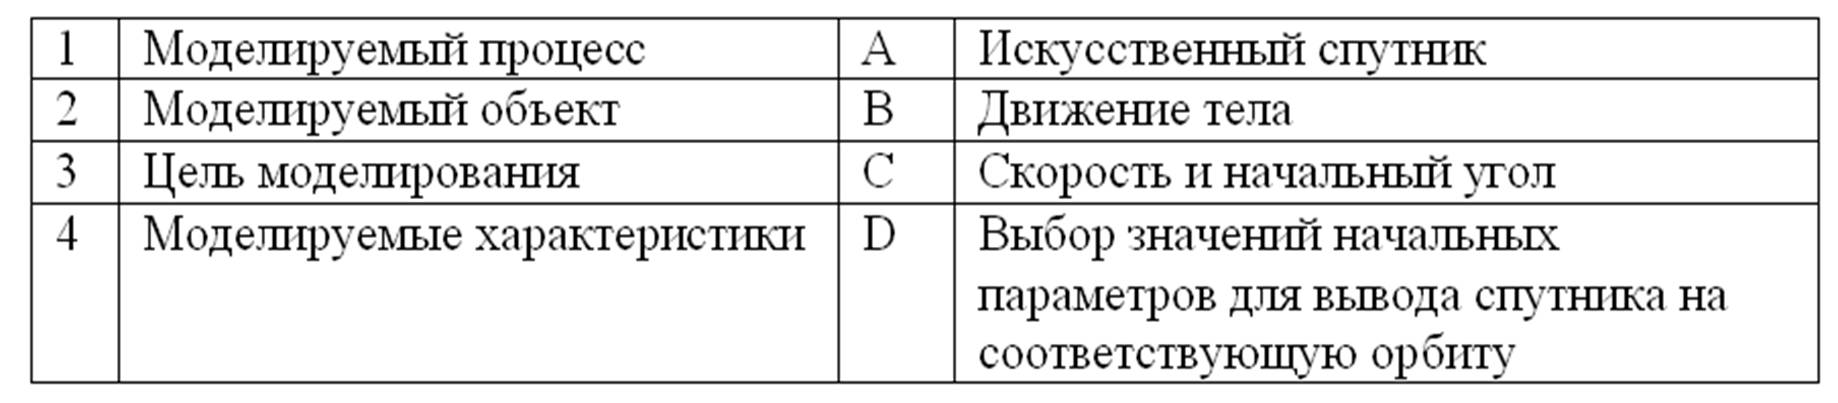 http://test.i-exam.ru/training/student/pic/3210_260322/caac344ae23d25a49e9a4f340aa811a0.jpg